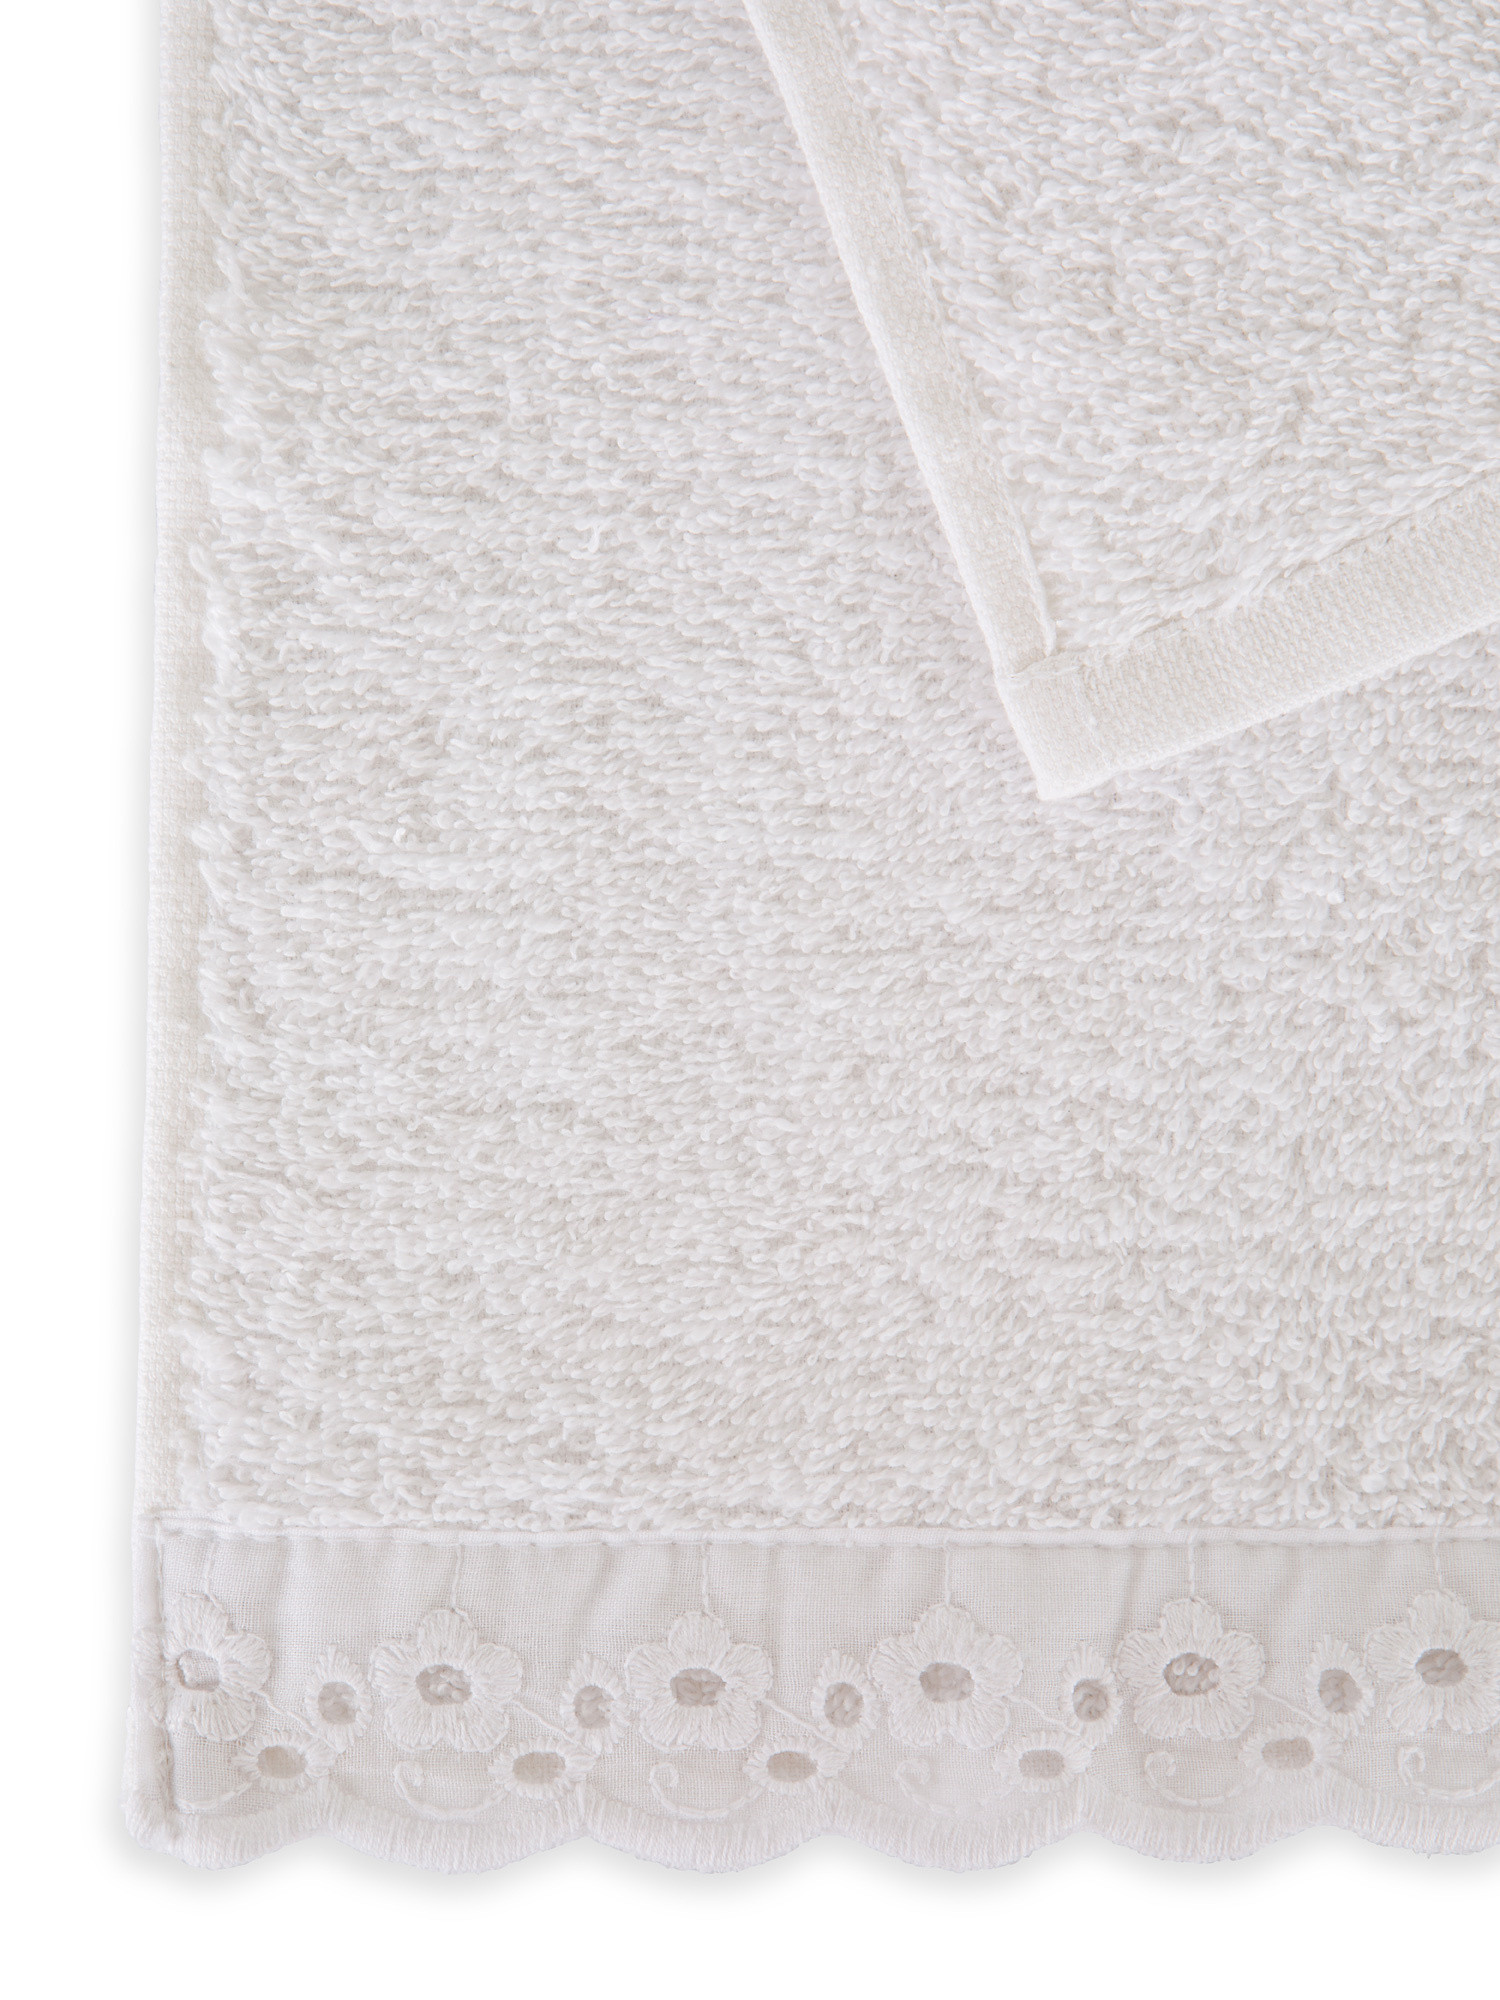 Asciugamano spugna di cotone bordo sangallo, Bianco, large image number 2